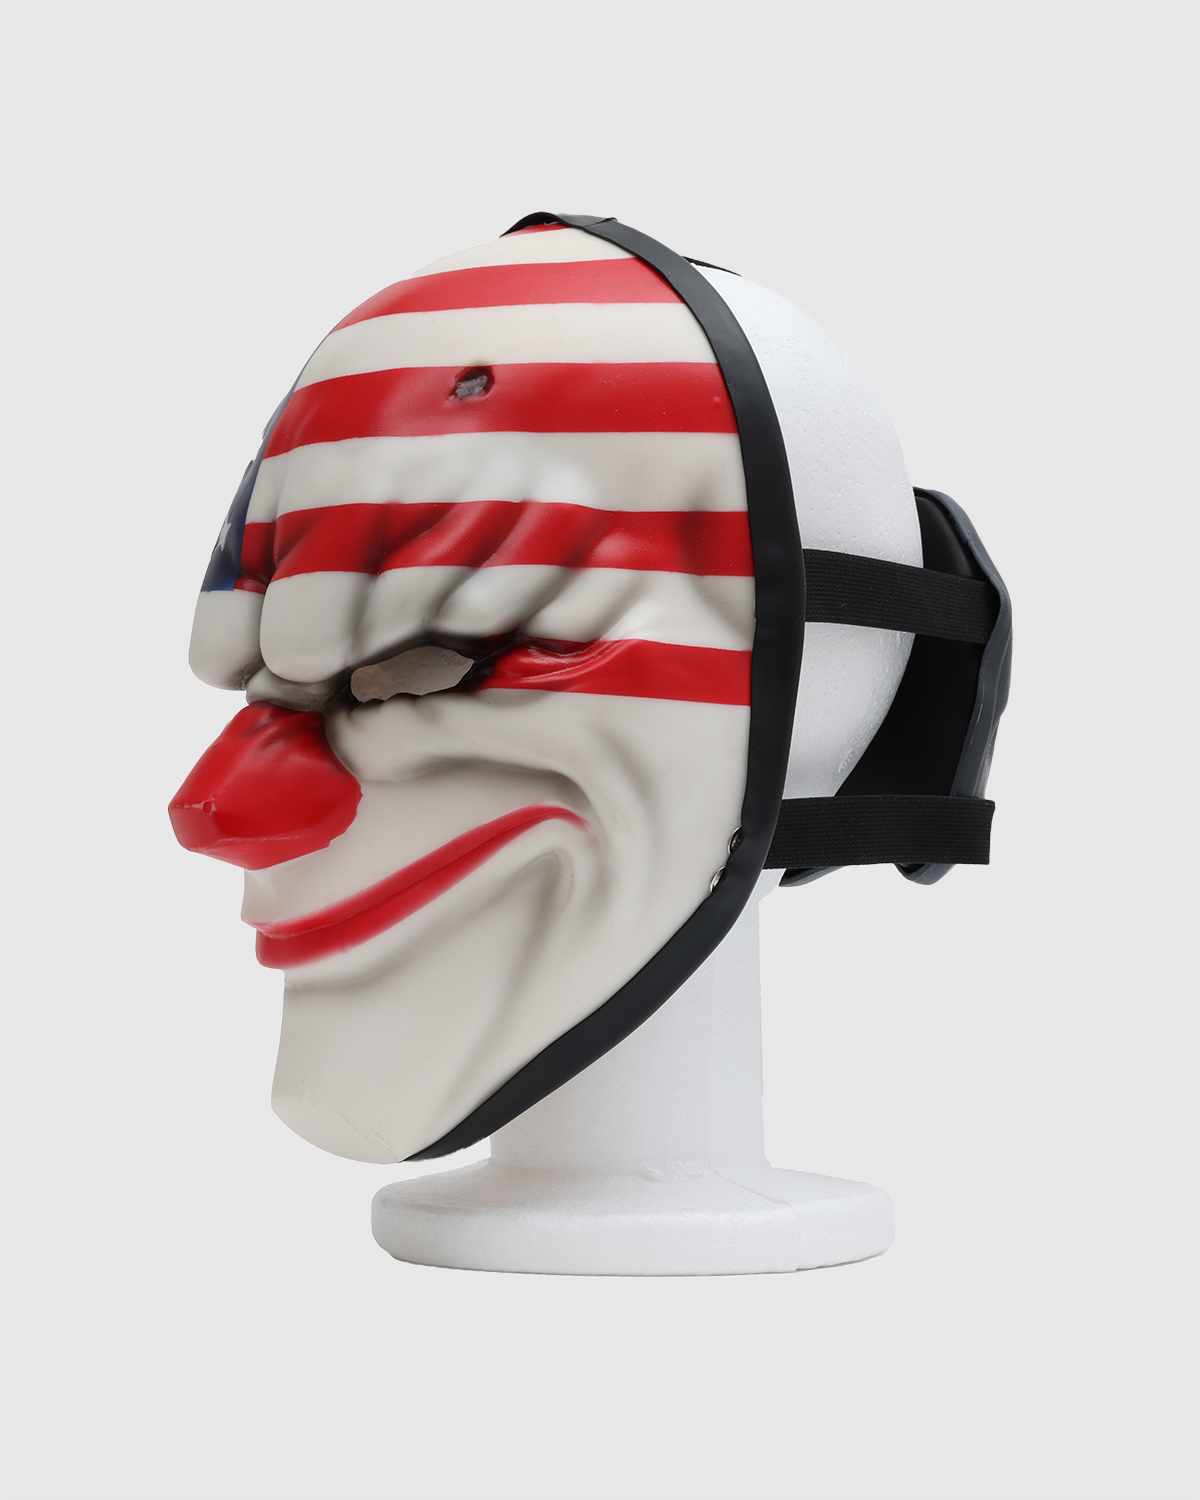 Premium Cosplay Mask "Dallas"